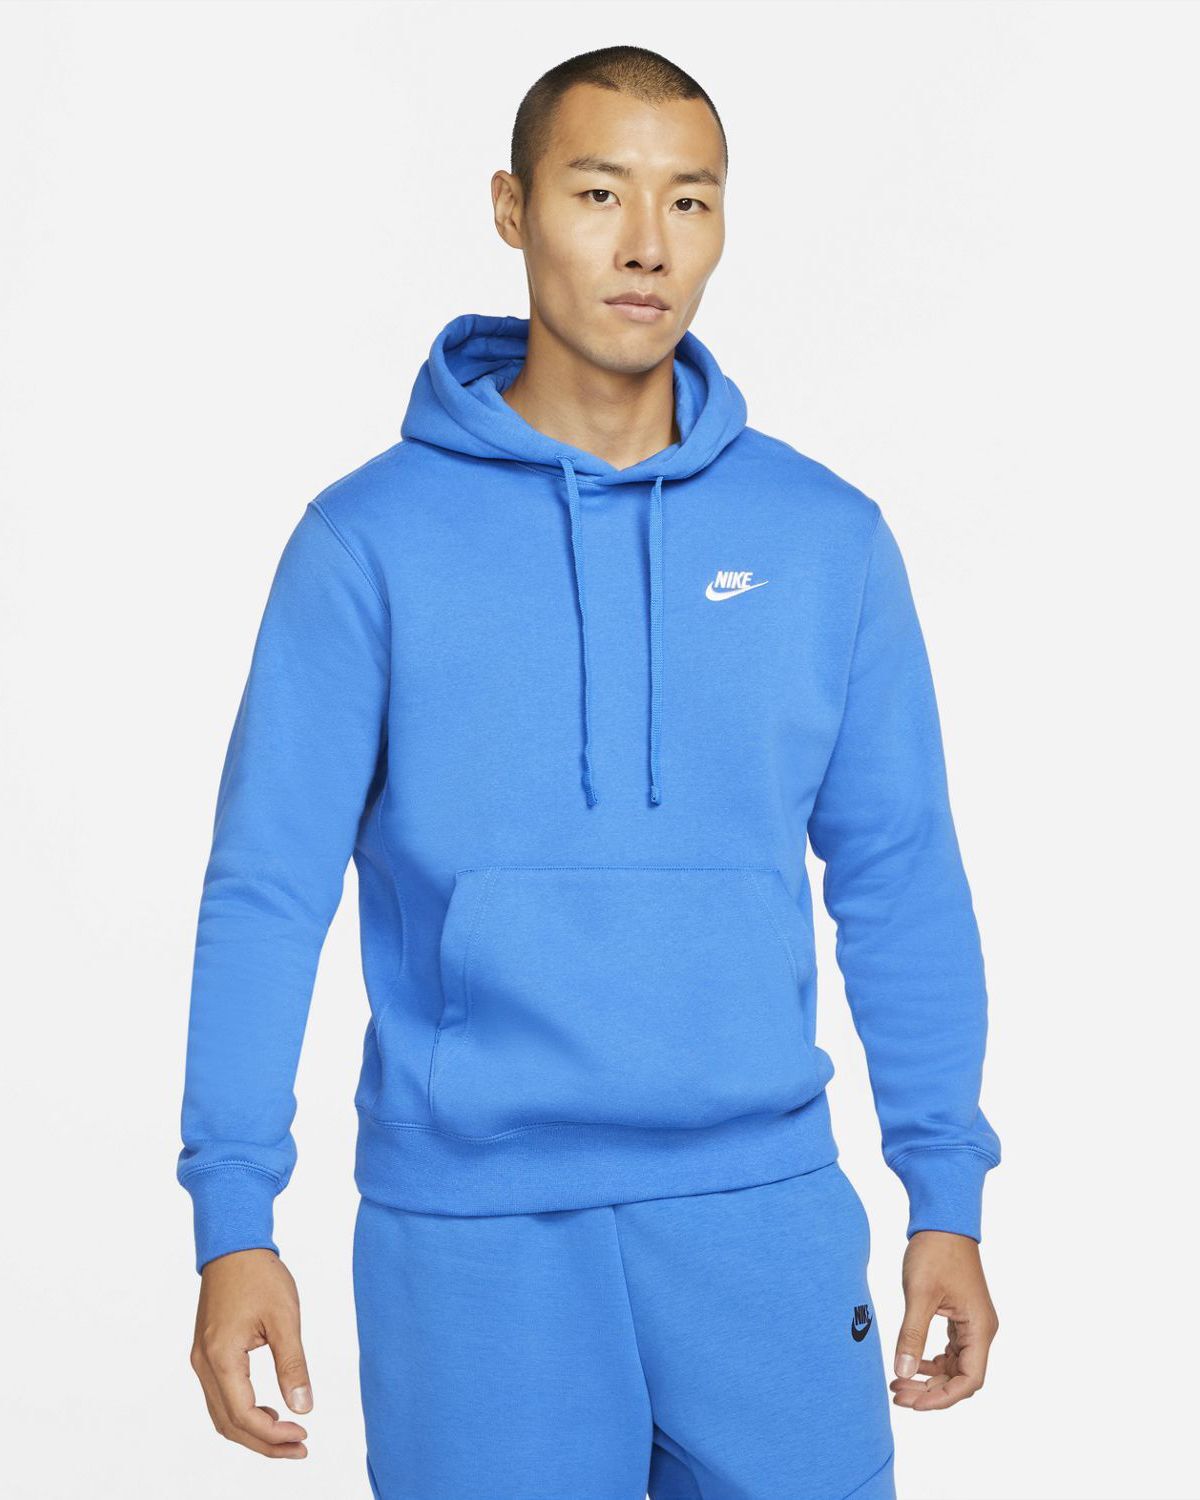 Sudadera con capucha Nike Sportswear Azul para Hombre - BV2654-403